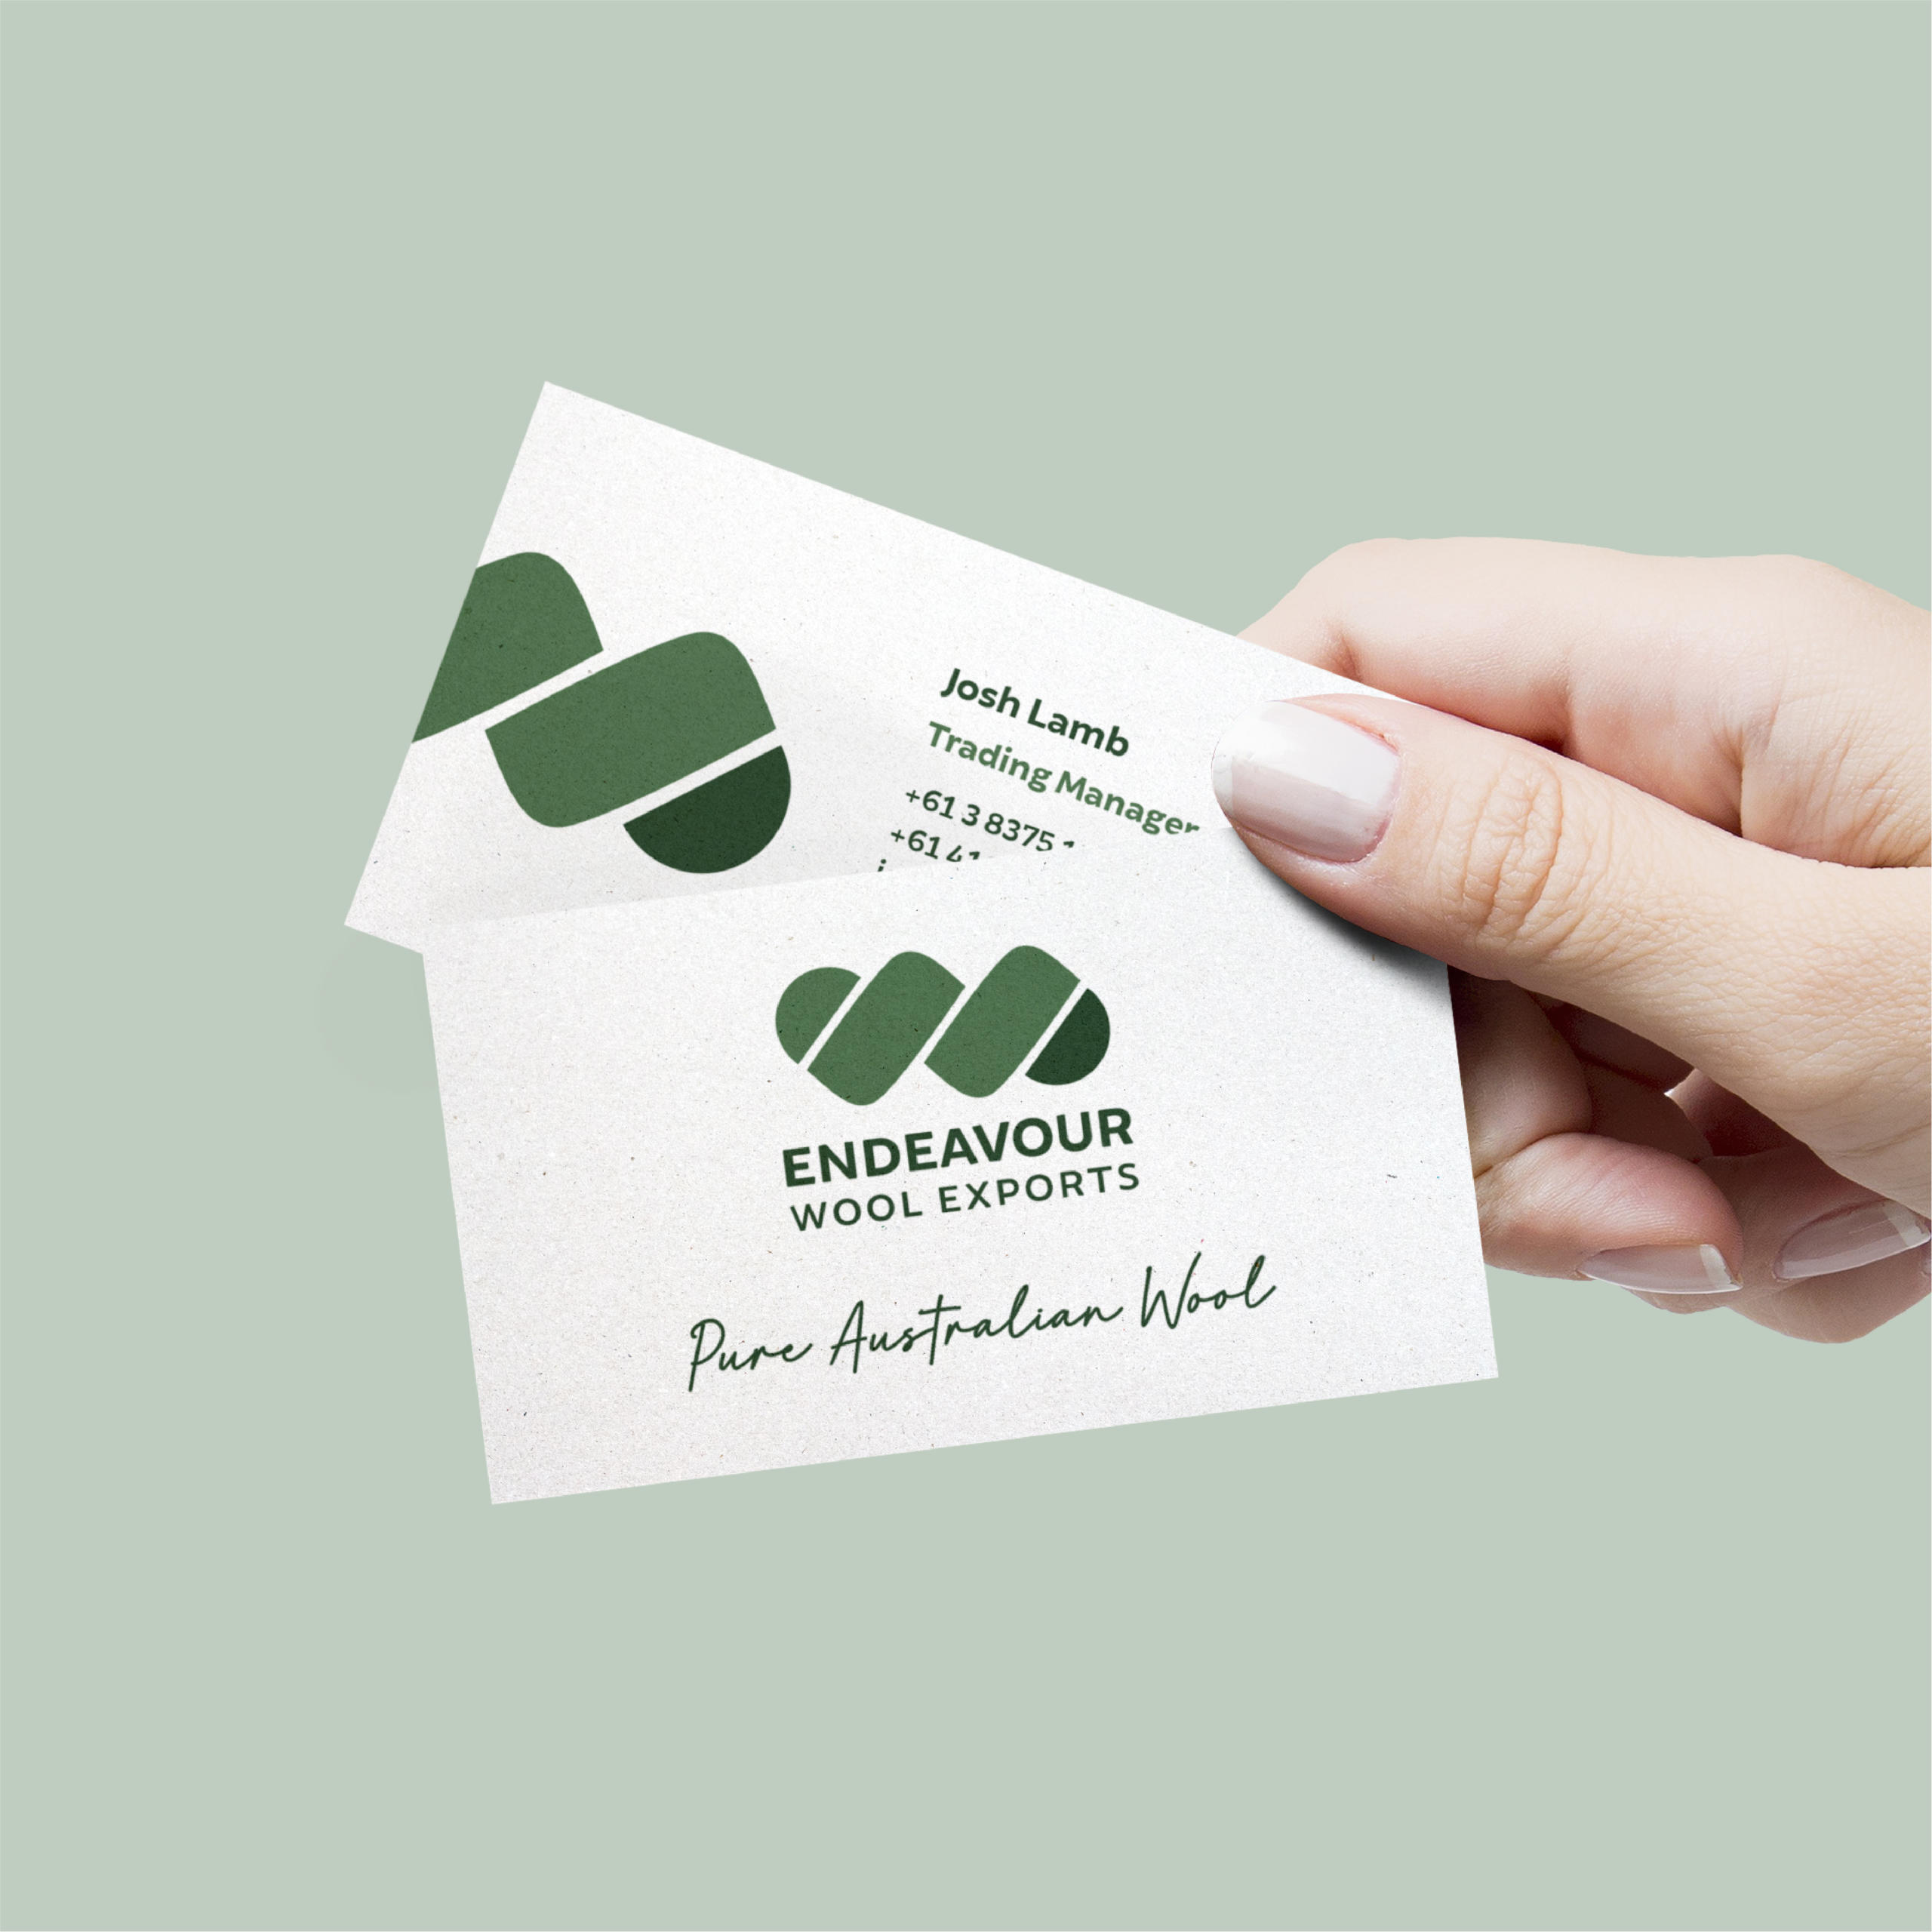 Ewepost-Endeavour Wool Exports Business Card Design